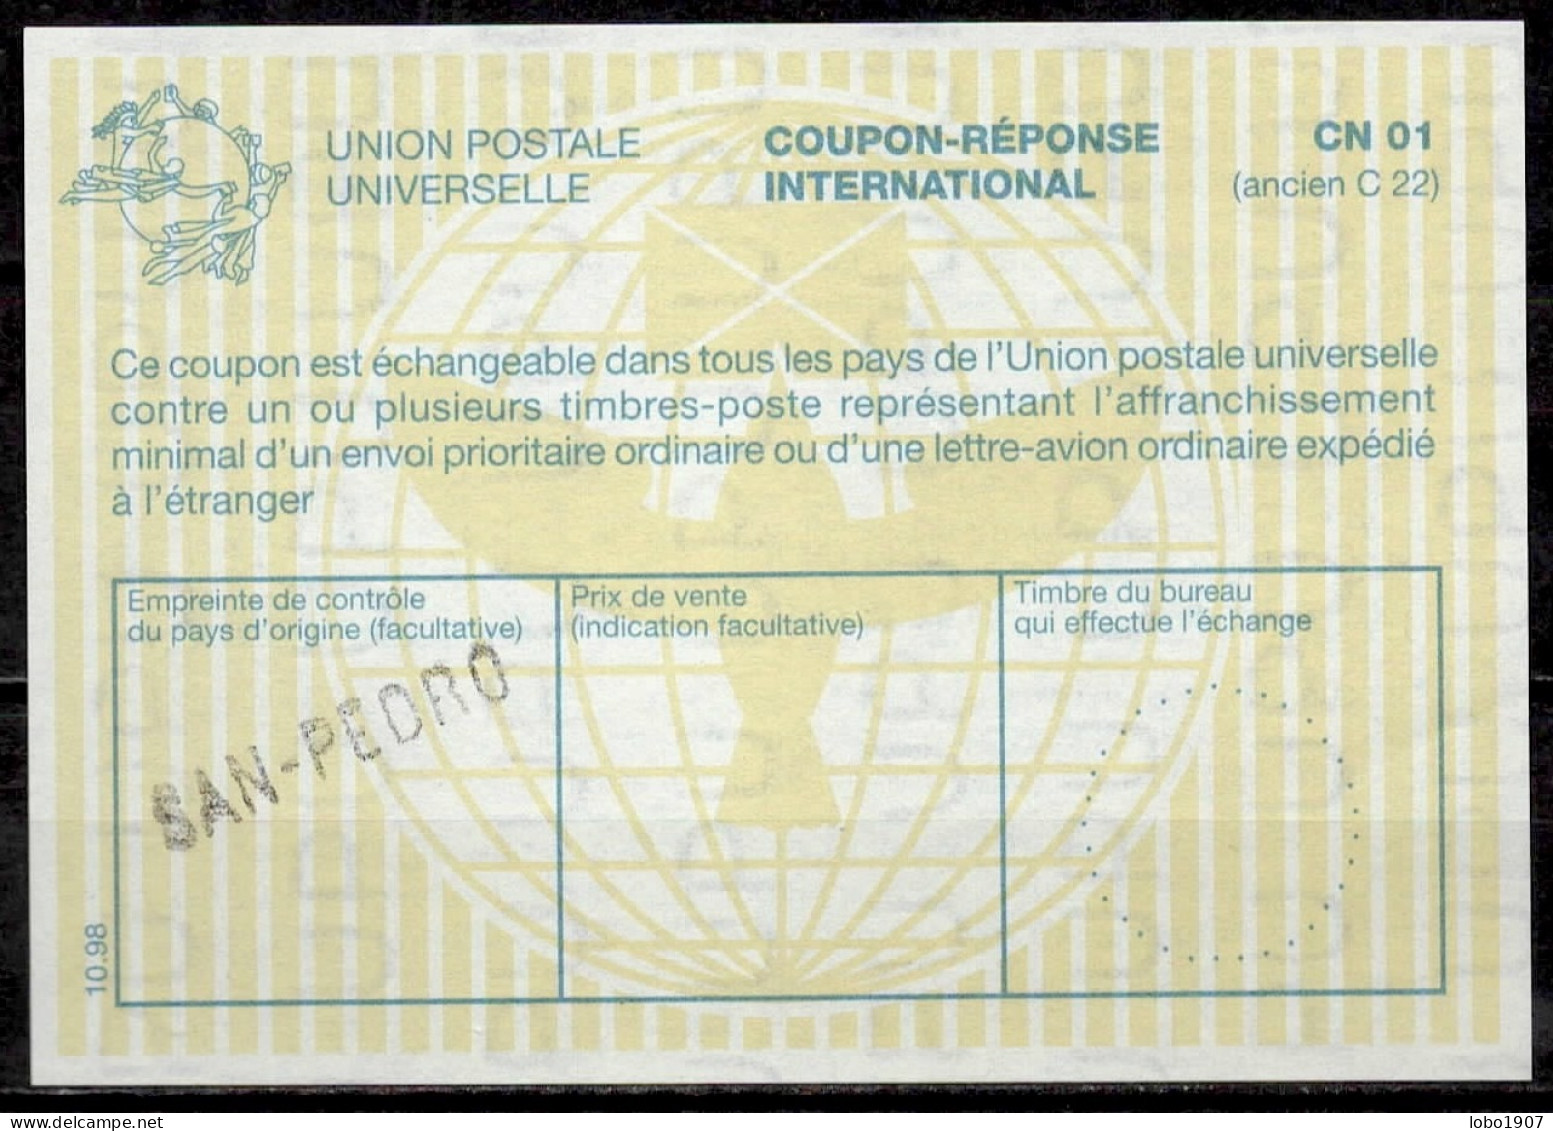 CÔTE D'IVOIRE IVORY COAST  La30  International Reply Coupon Reponse Antwortschein IRC IAS O SAN PEDRO - Ivoorkust (1960-...)